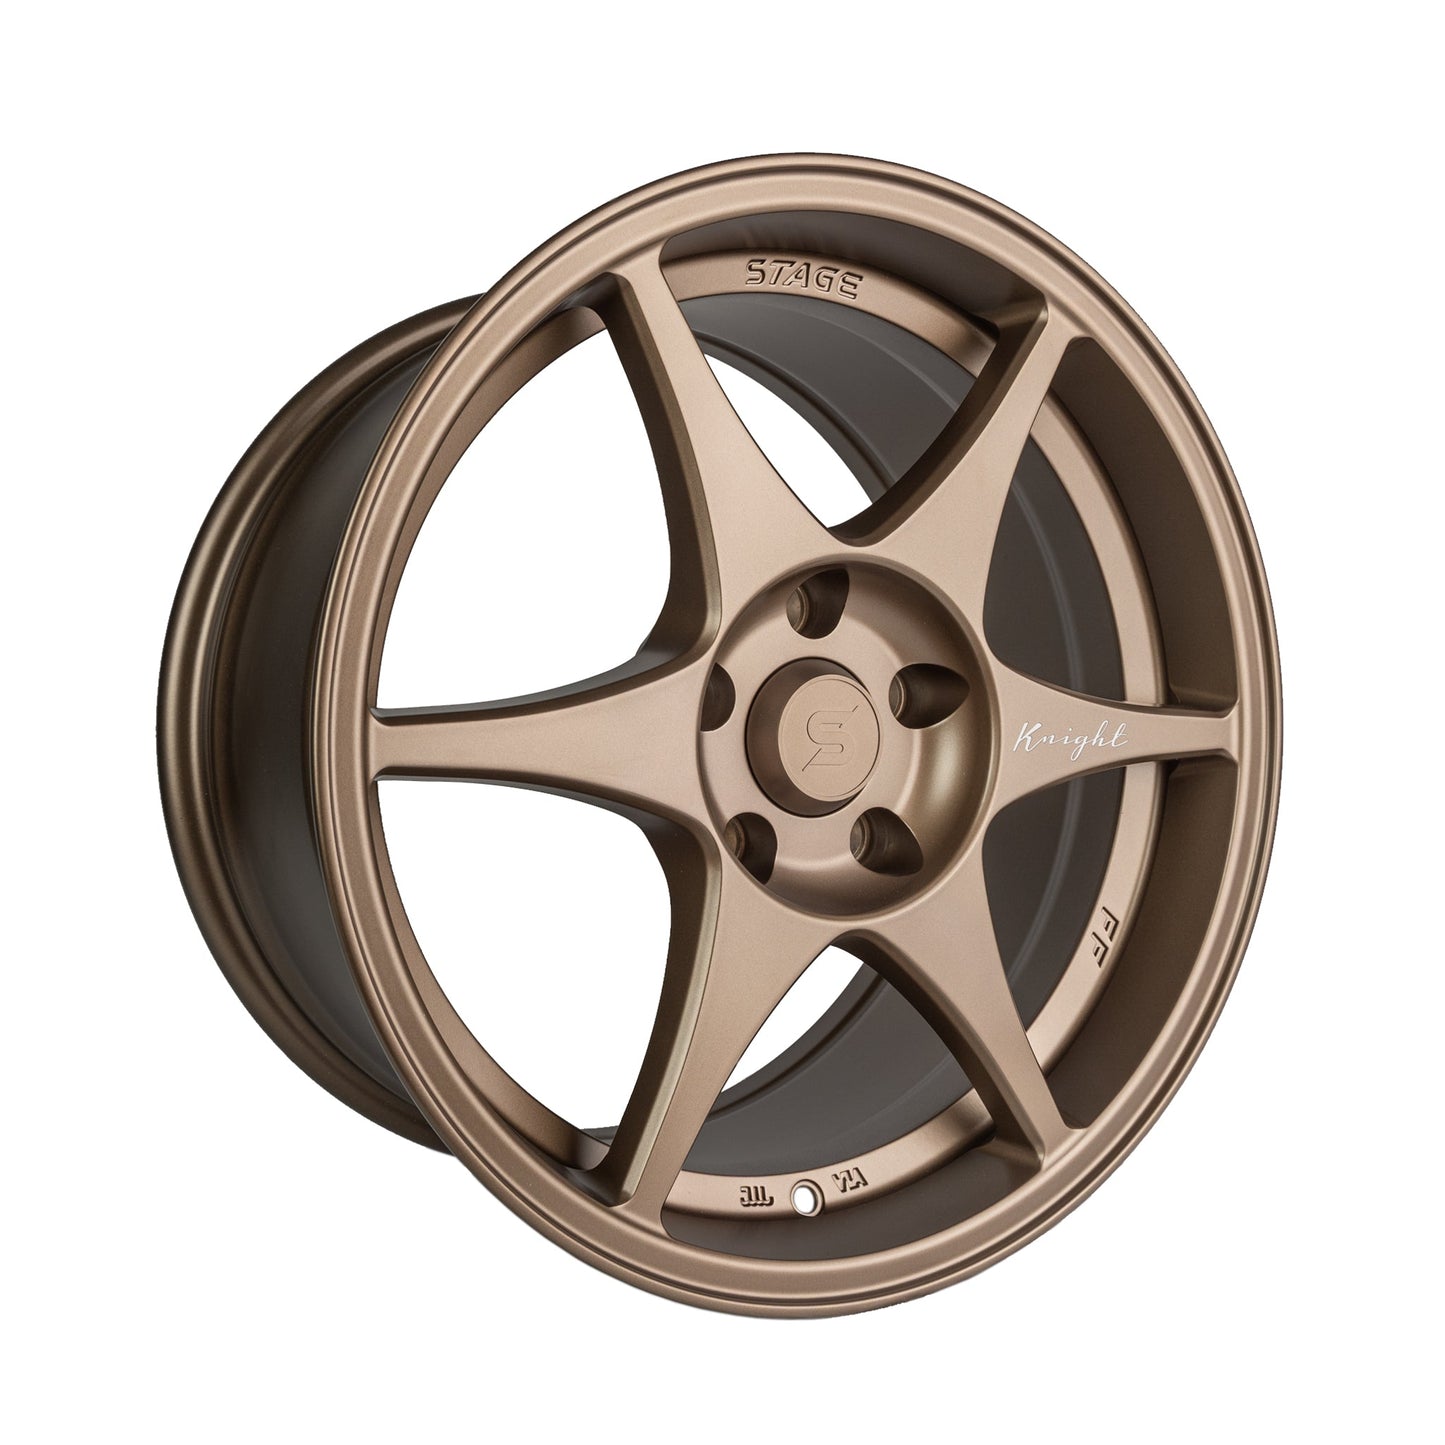 Stage Wheels Knight 17x9 +10mm 5x120 CB: 74.1 Color: Matte Bronze